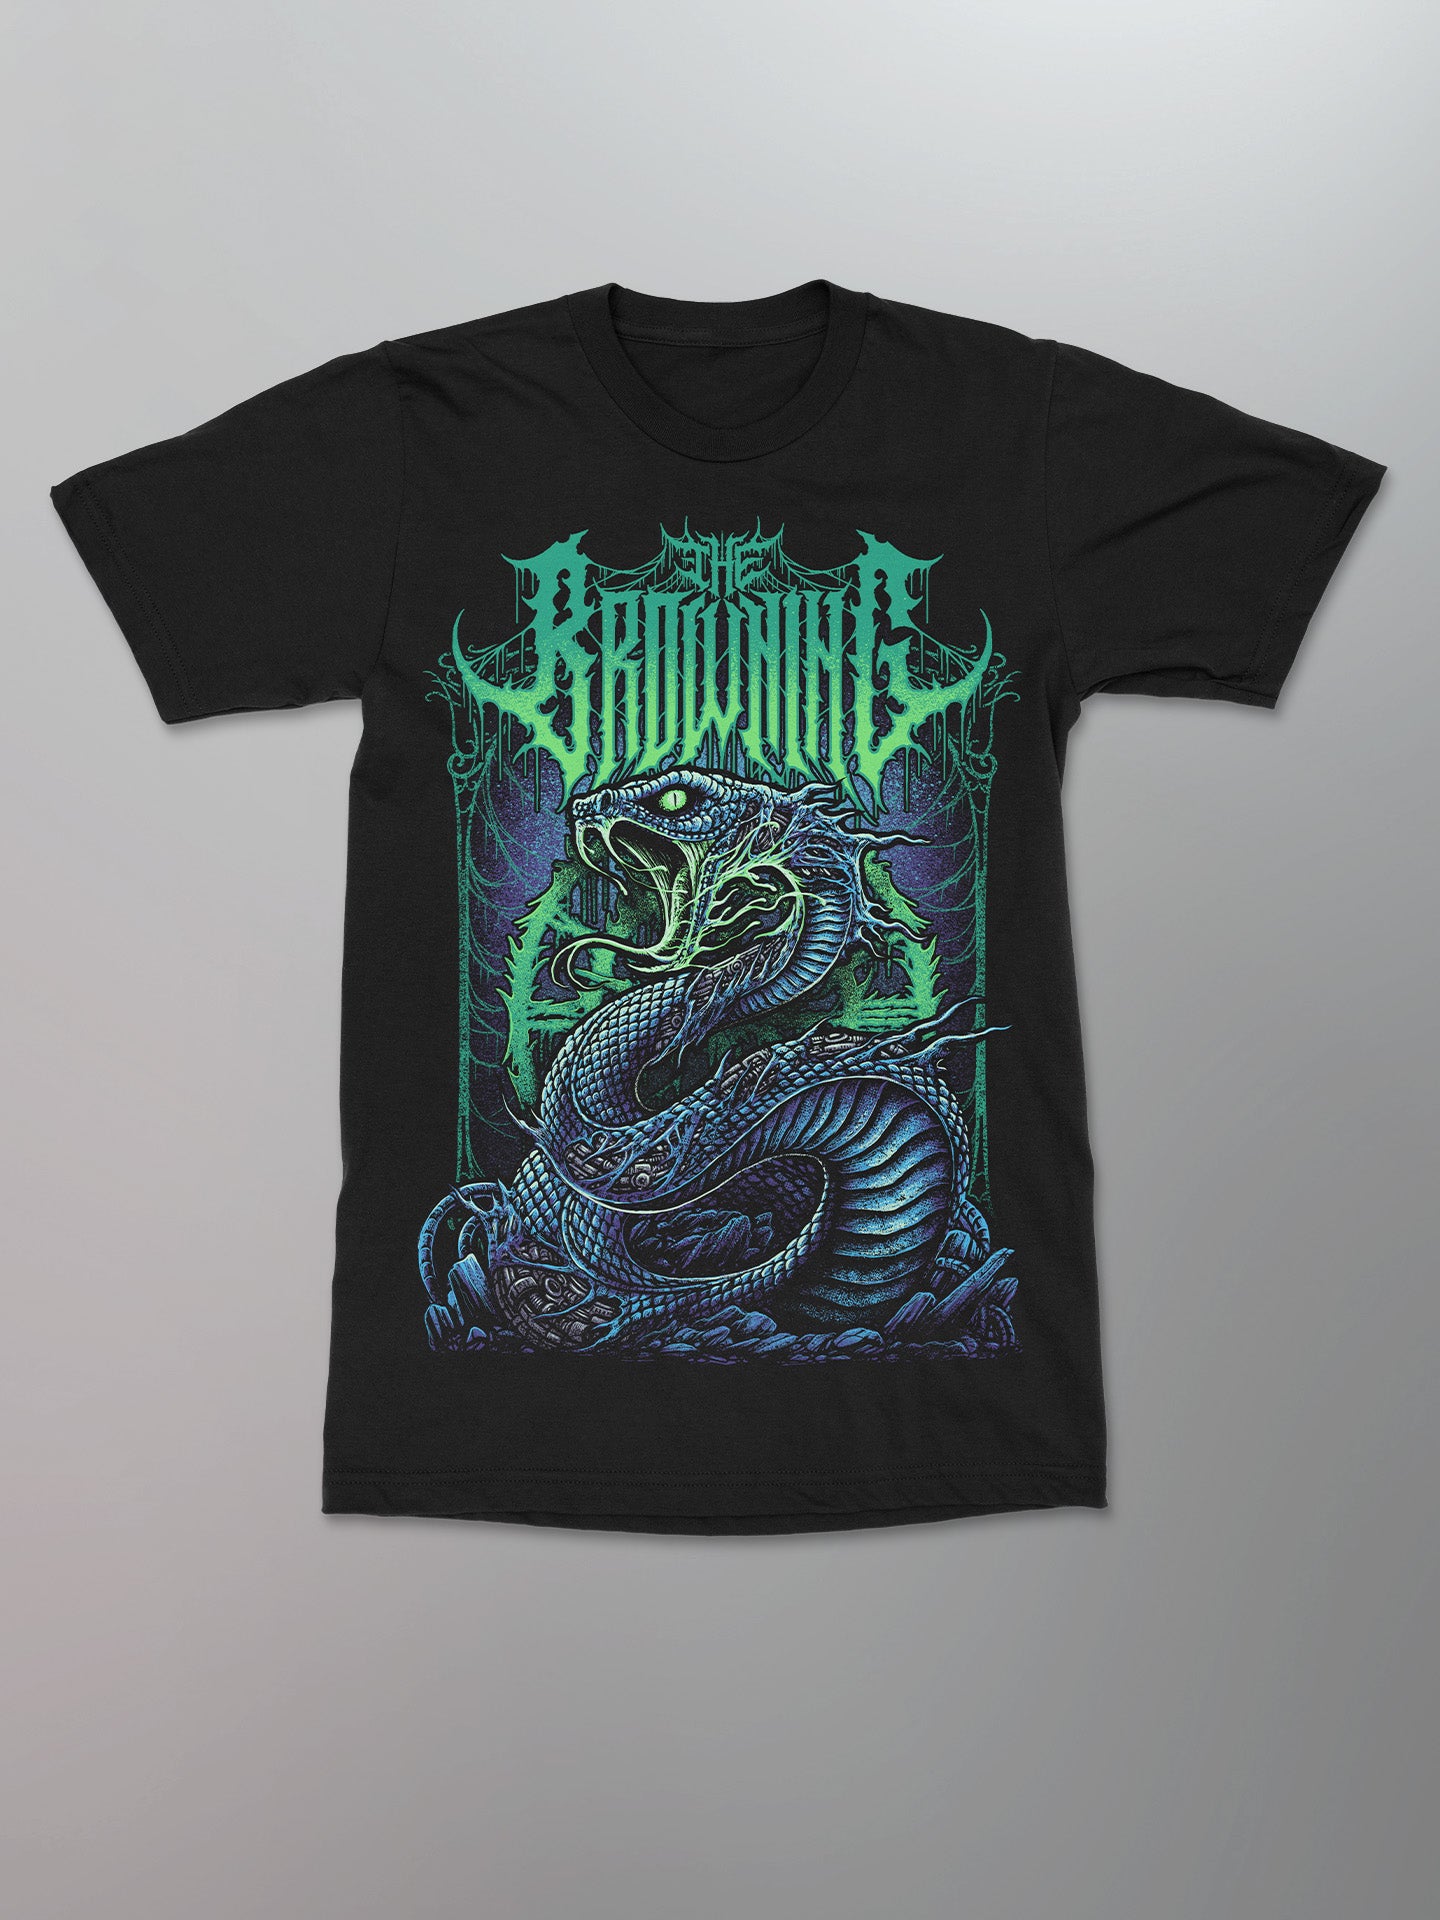 The Browning - Serpent Shirt